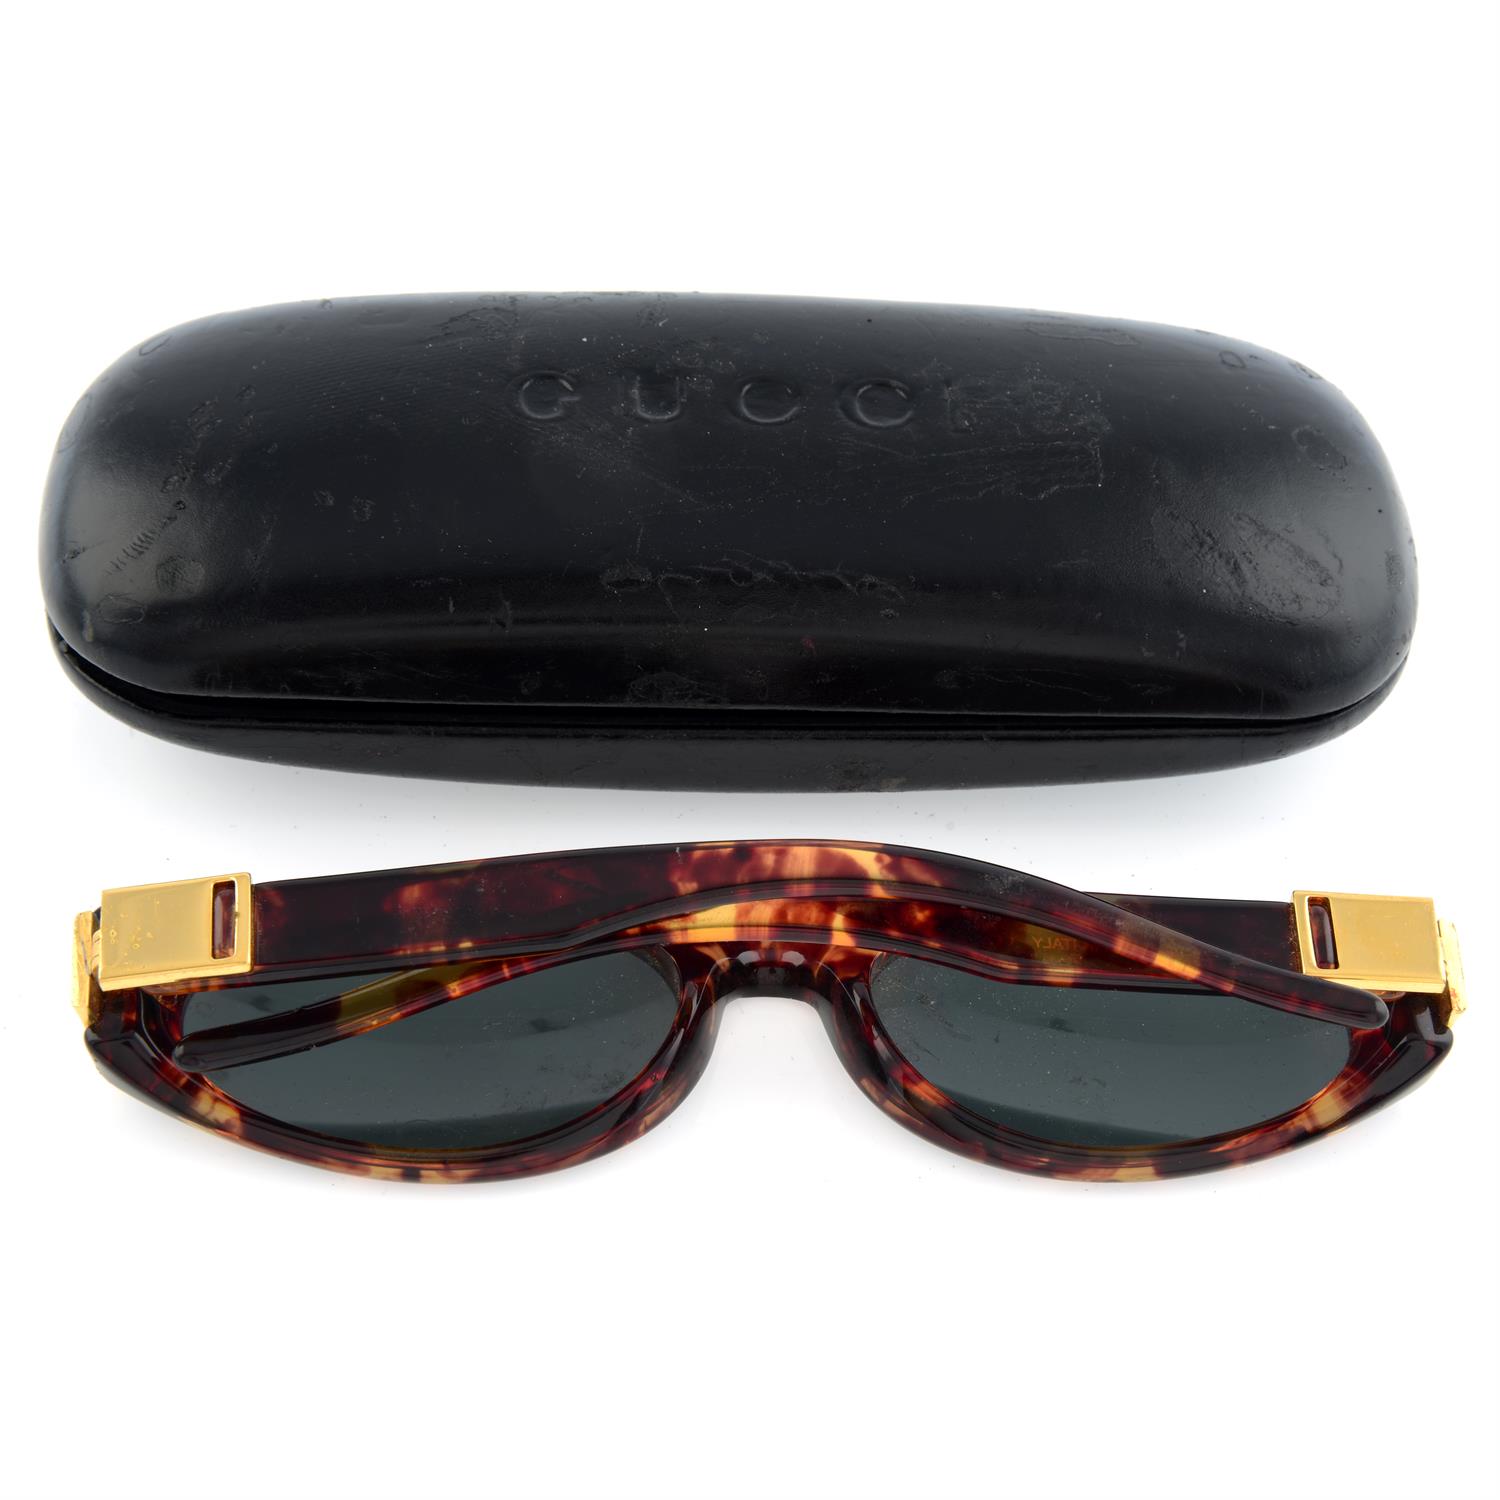 Gucci - sunglasses. - Image 2 of 2